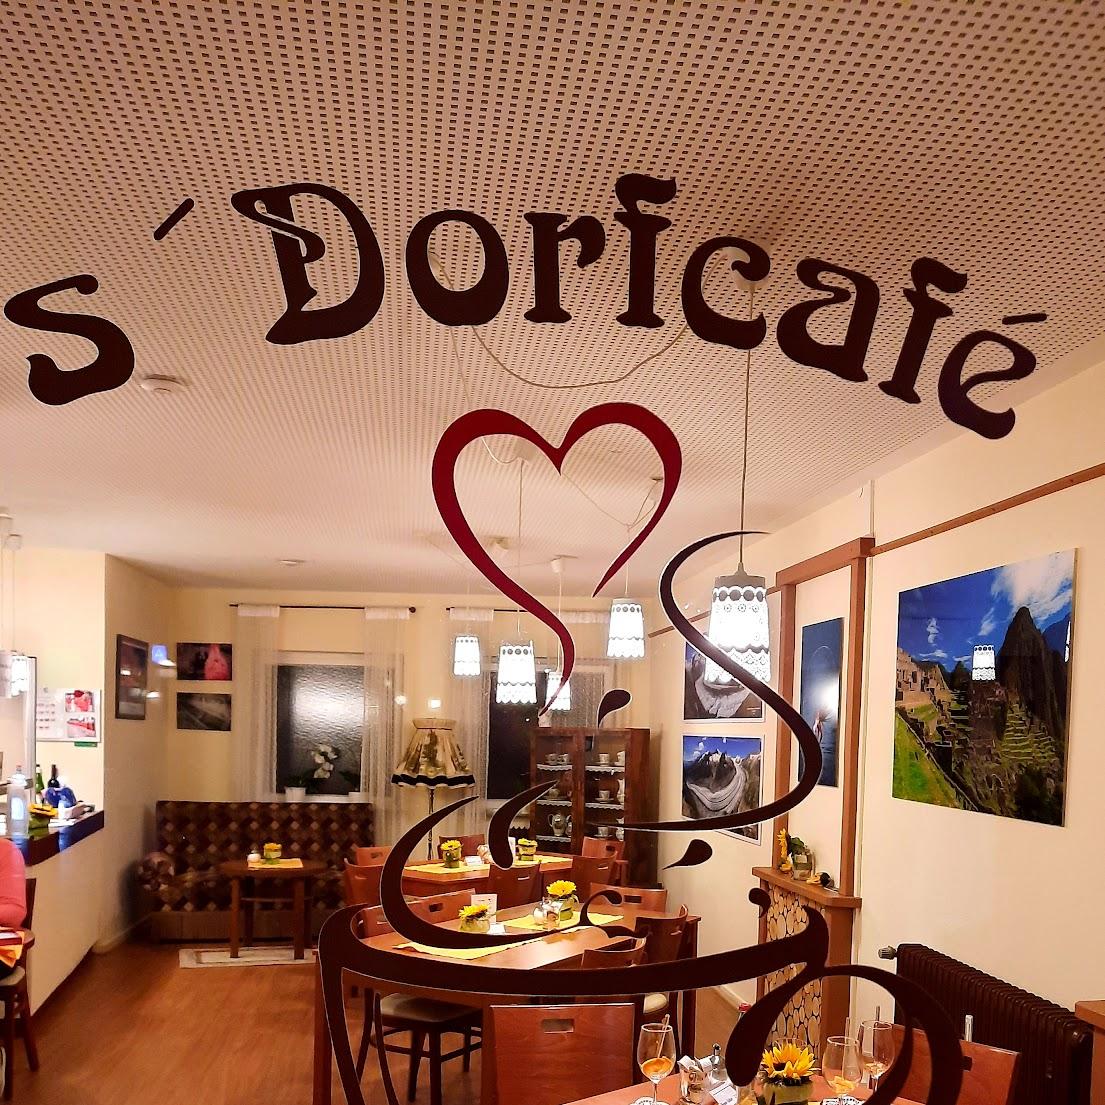 Restaurant "Dorfcafé" in Gütenbach